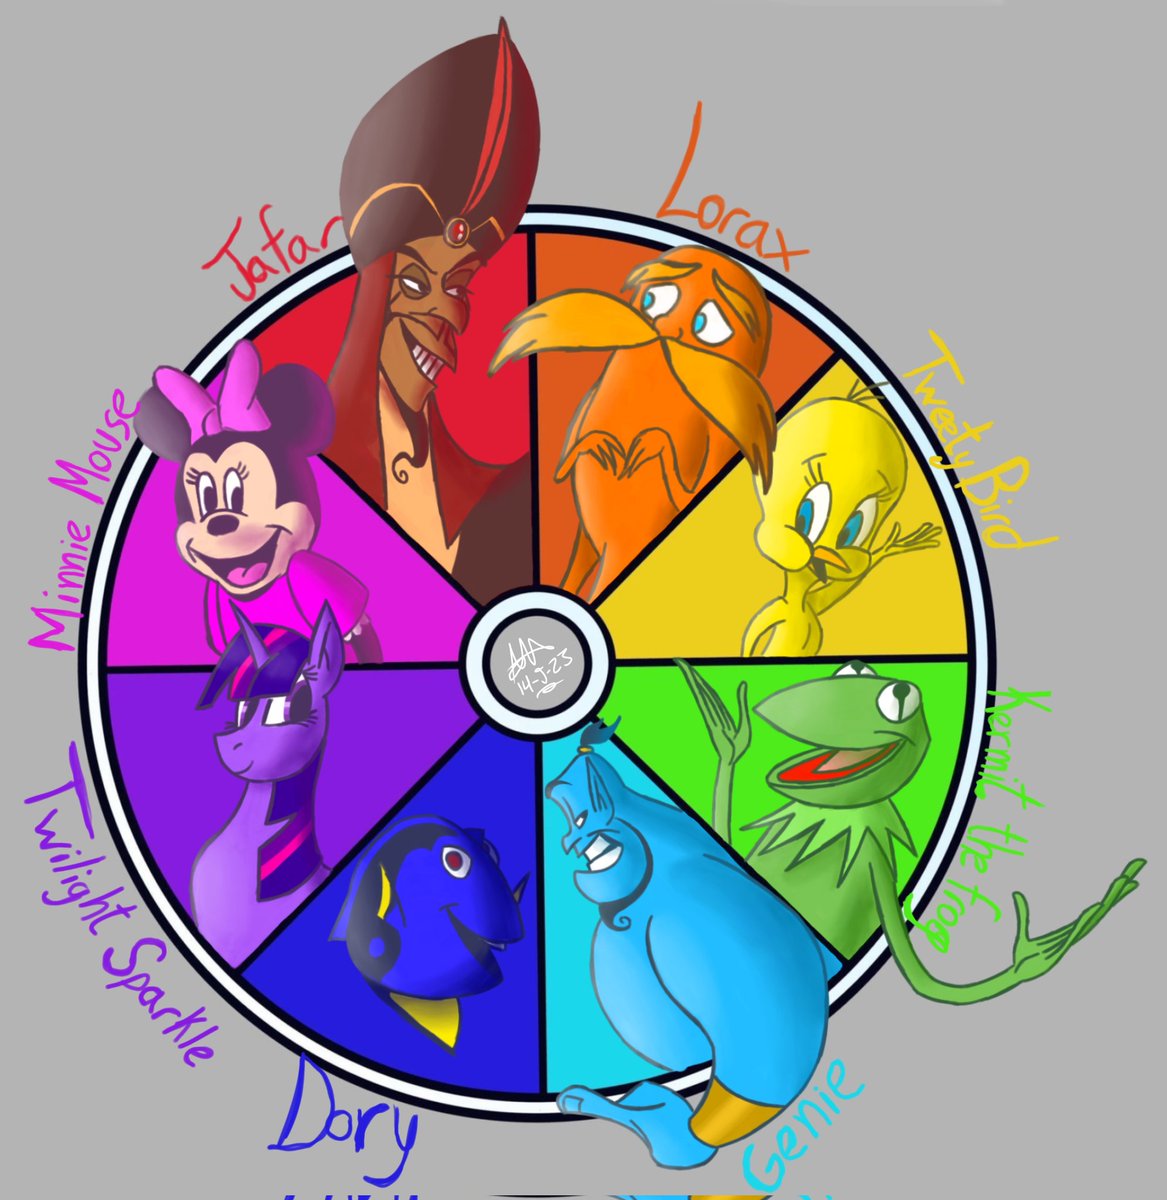 Color Wheel Character

#aladdindisney #lorax #LooneyTunes #muppets #nemodisney #mylittlepony #Disney
#MinnieMouse